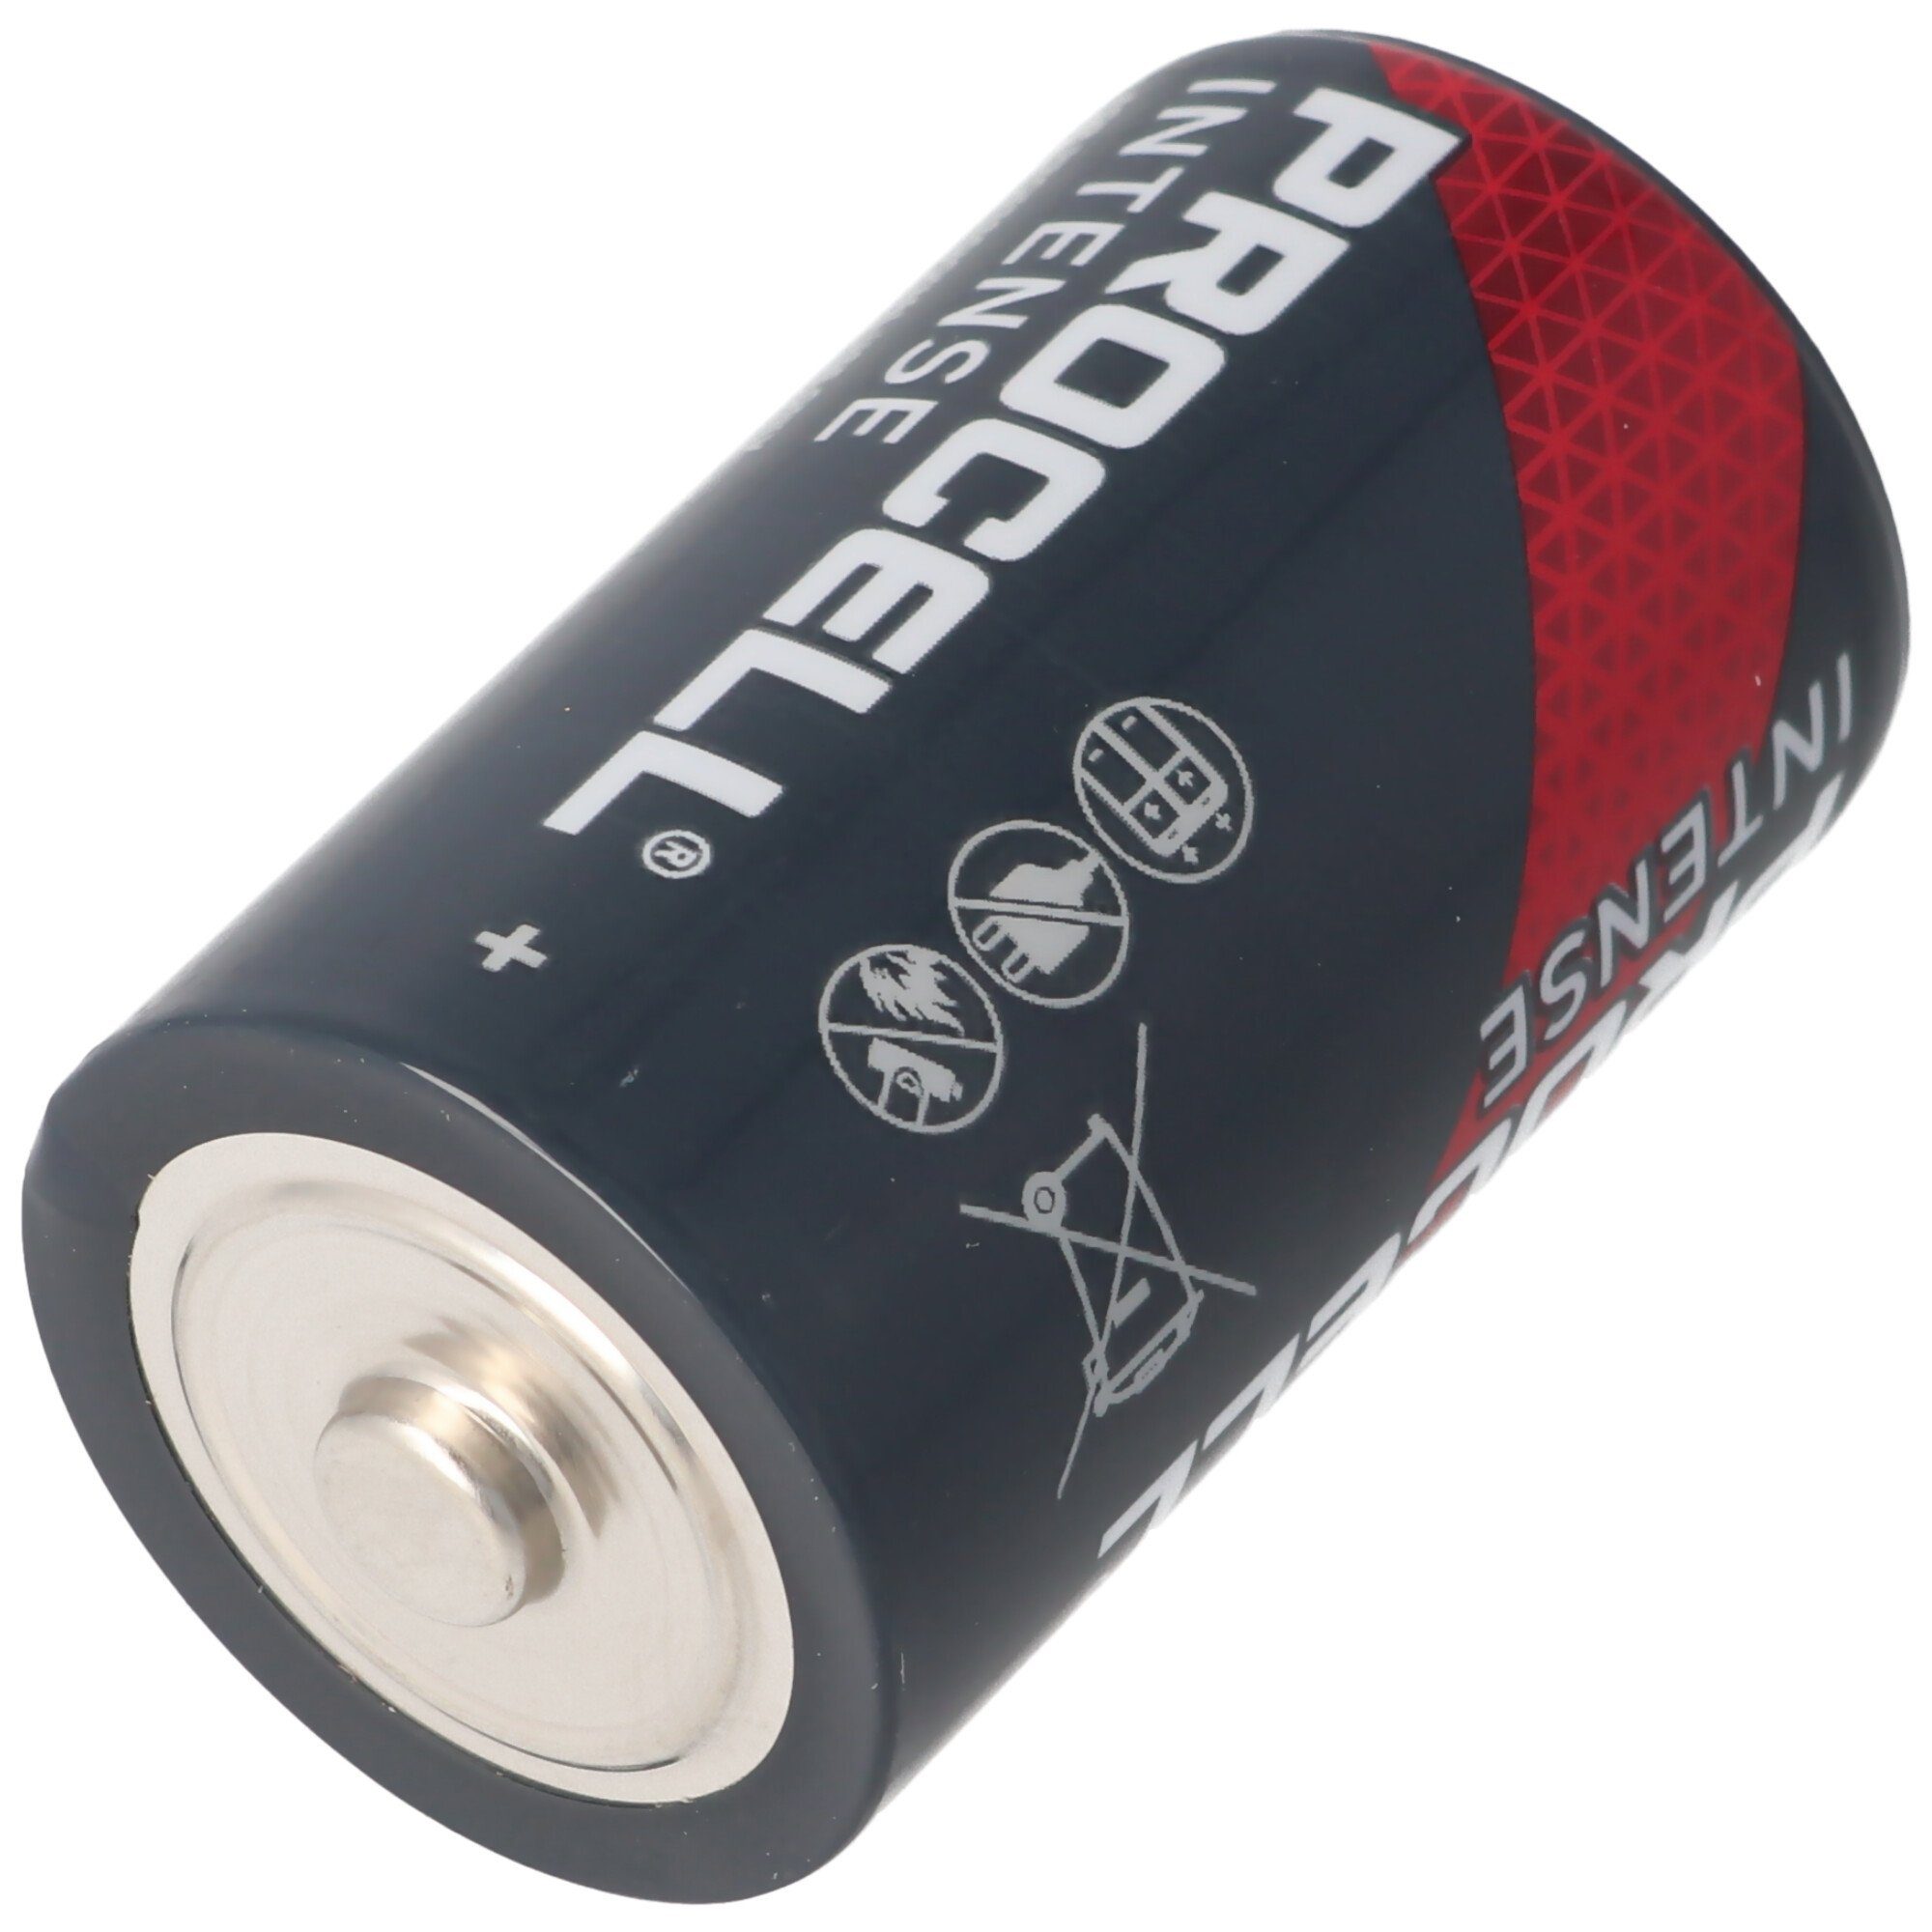 Mono Stück D, im Karton, Duracell LR20 (1,5 10 Batterie, Duracell Intense V) energie für Procell